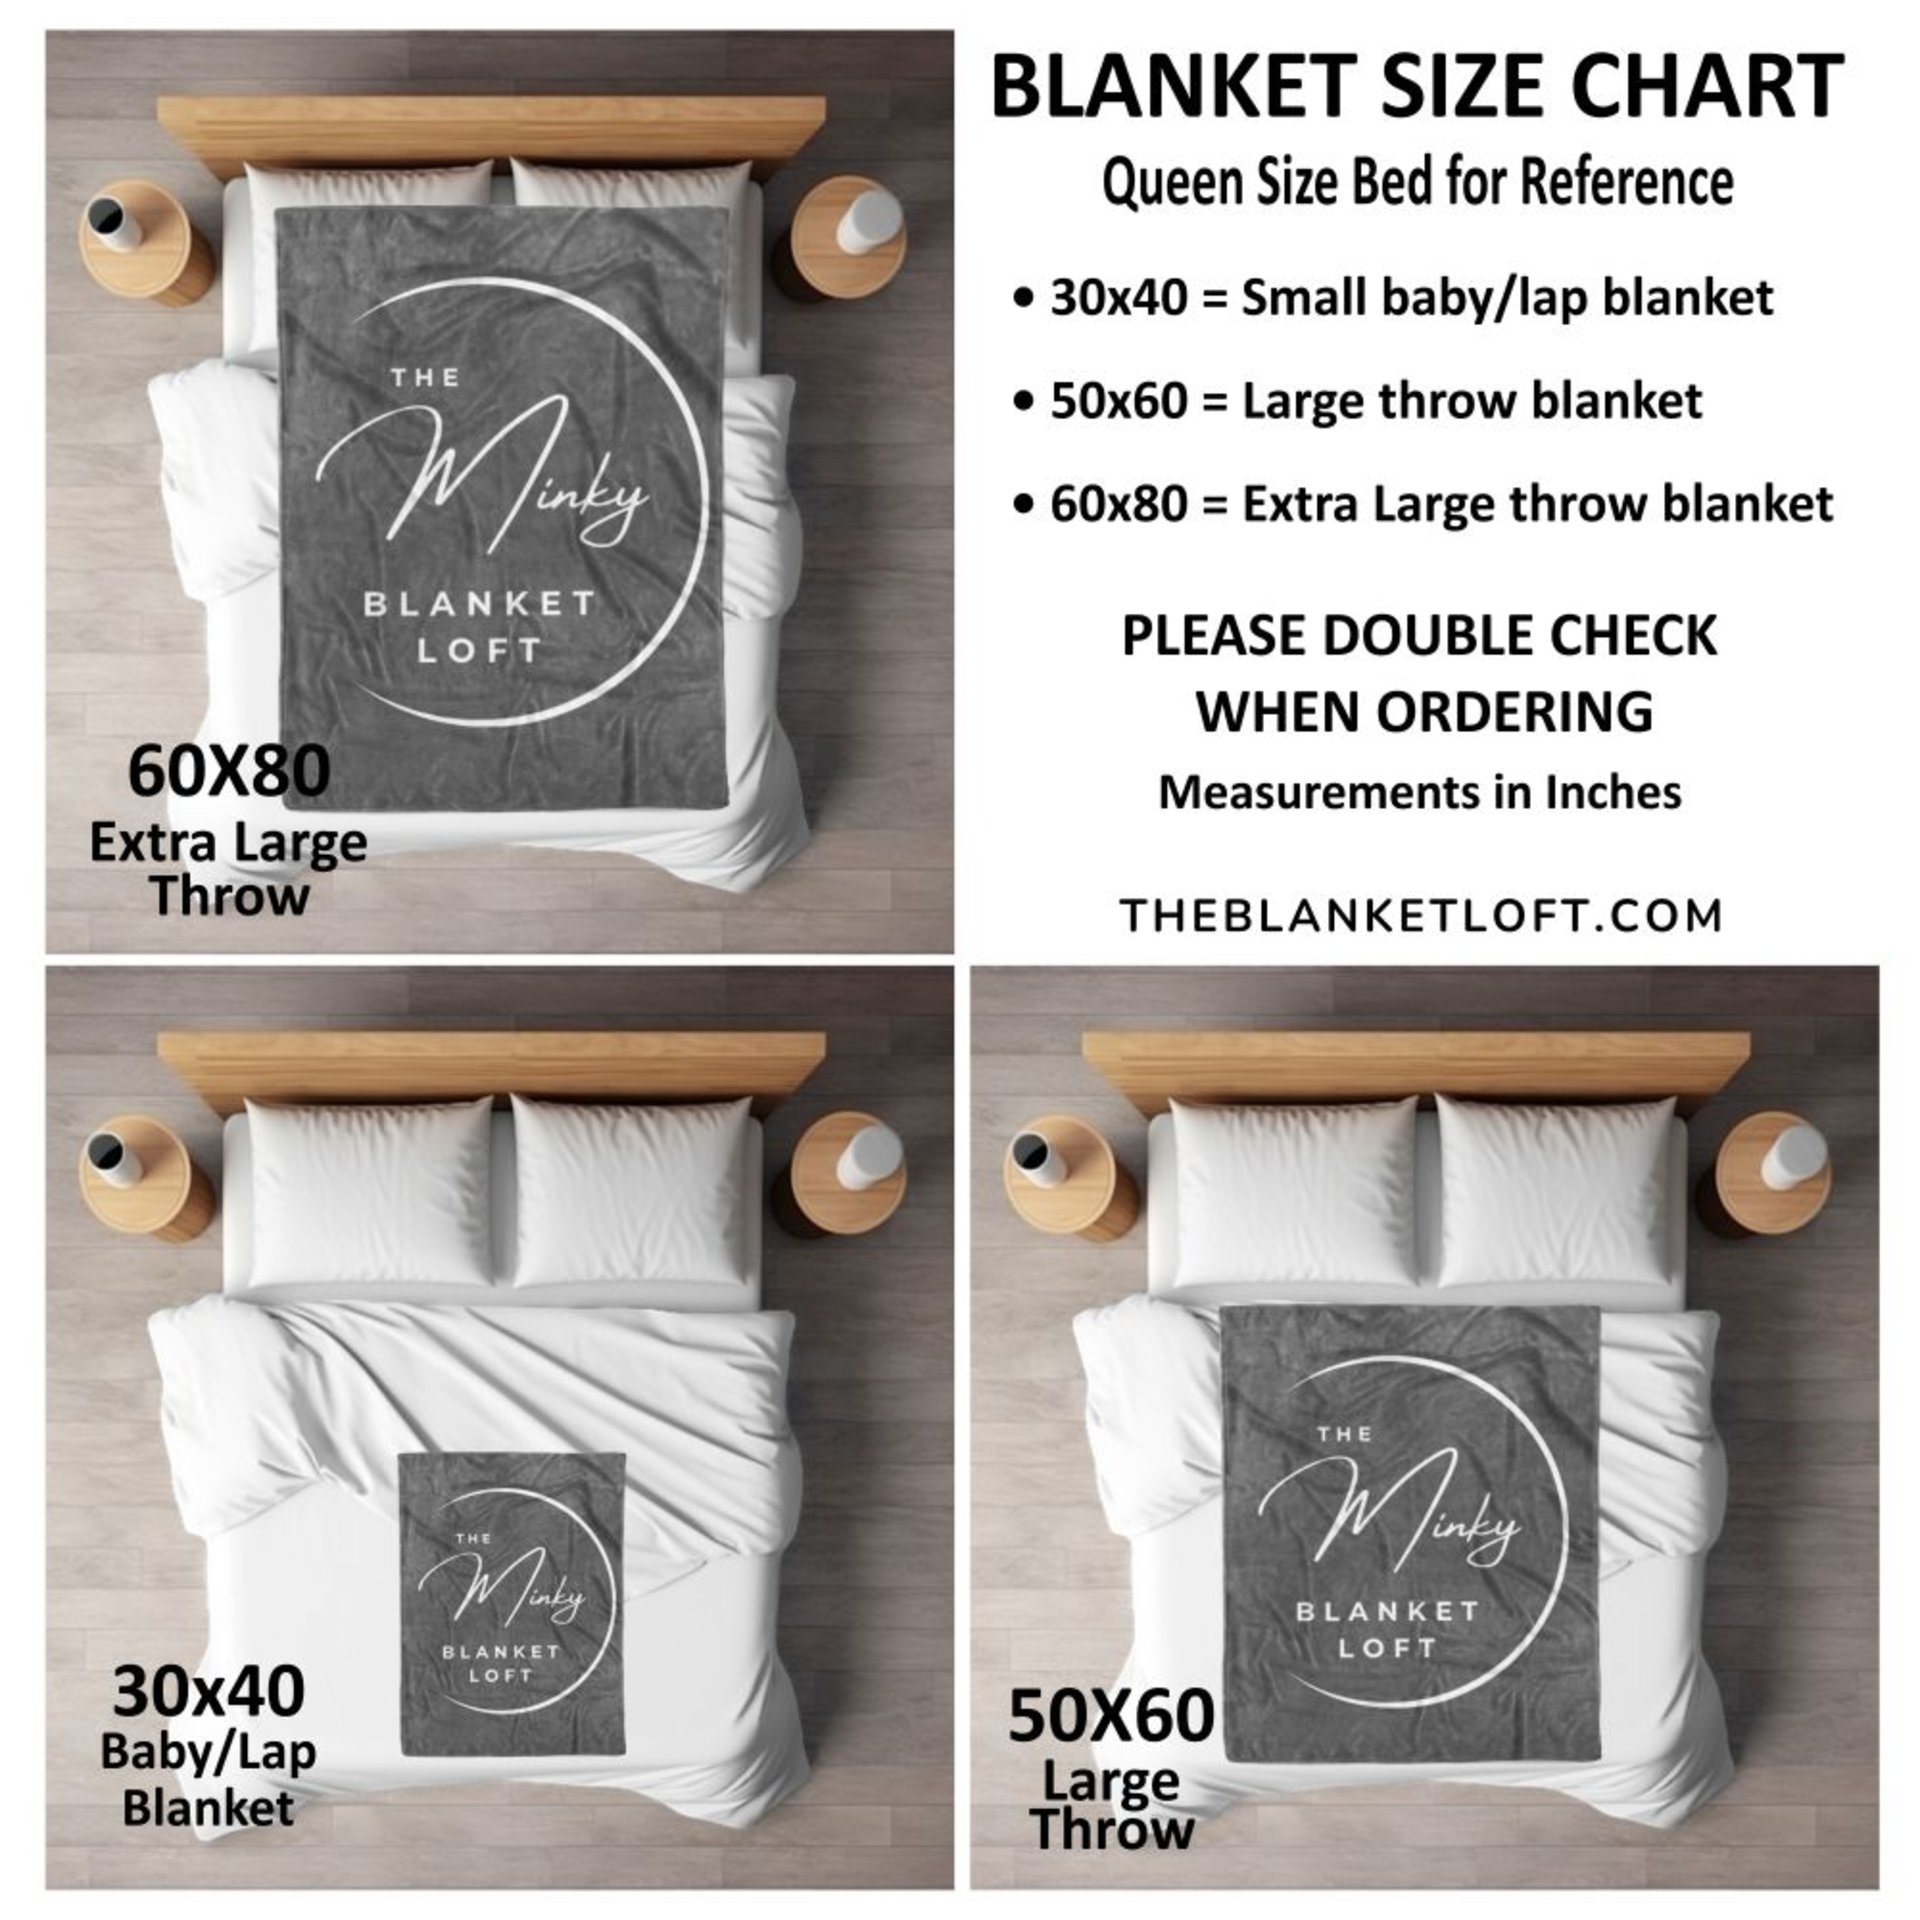 Custom Photo Blanket for Nana